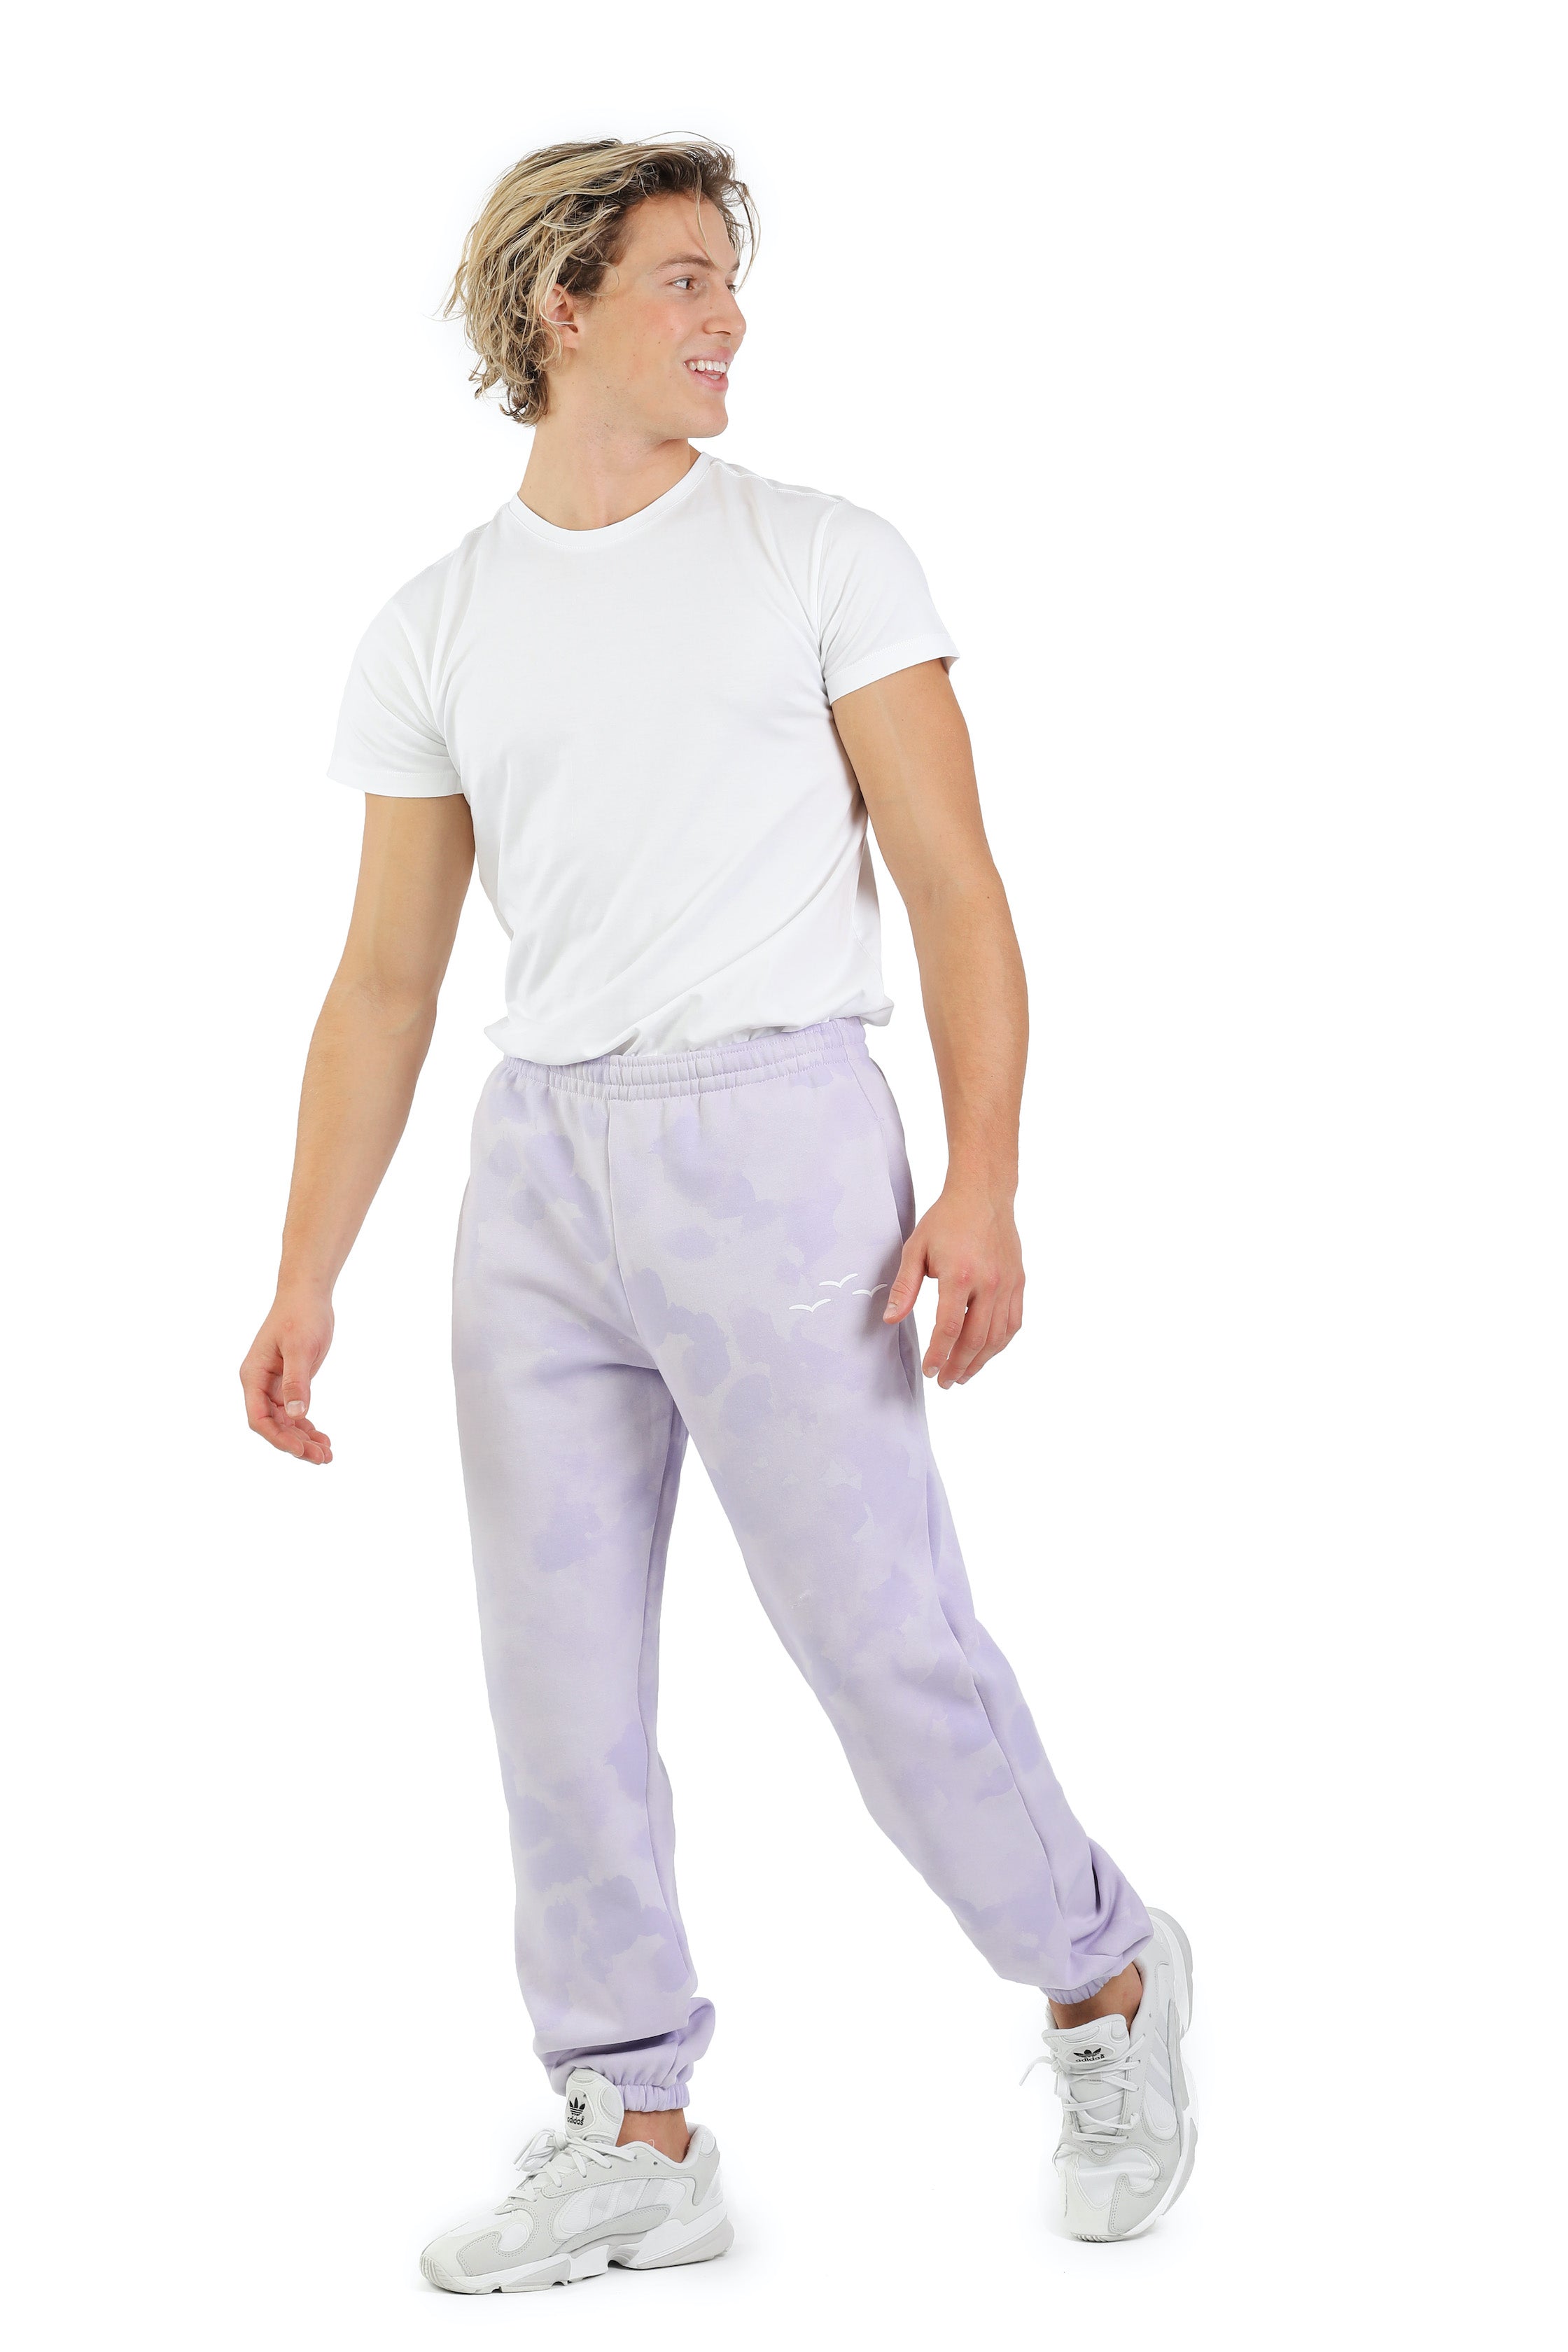 Gubotare Sweat Pants for Man Pants Spring/Summer New Men'S Wide Leg Pants  Solid Color Trend Long Pants Men'S Casual (Grey, XXL)